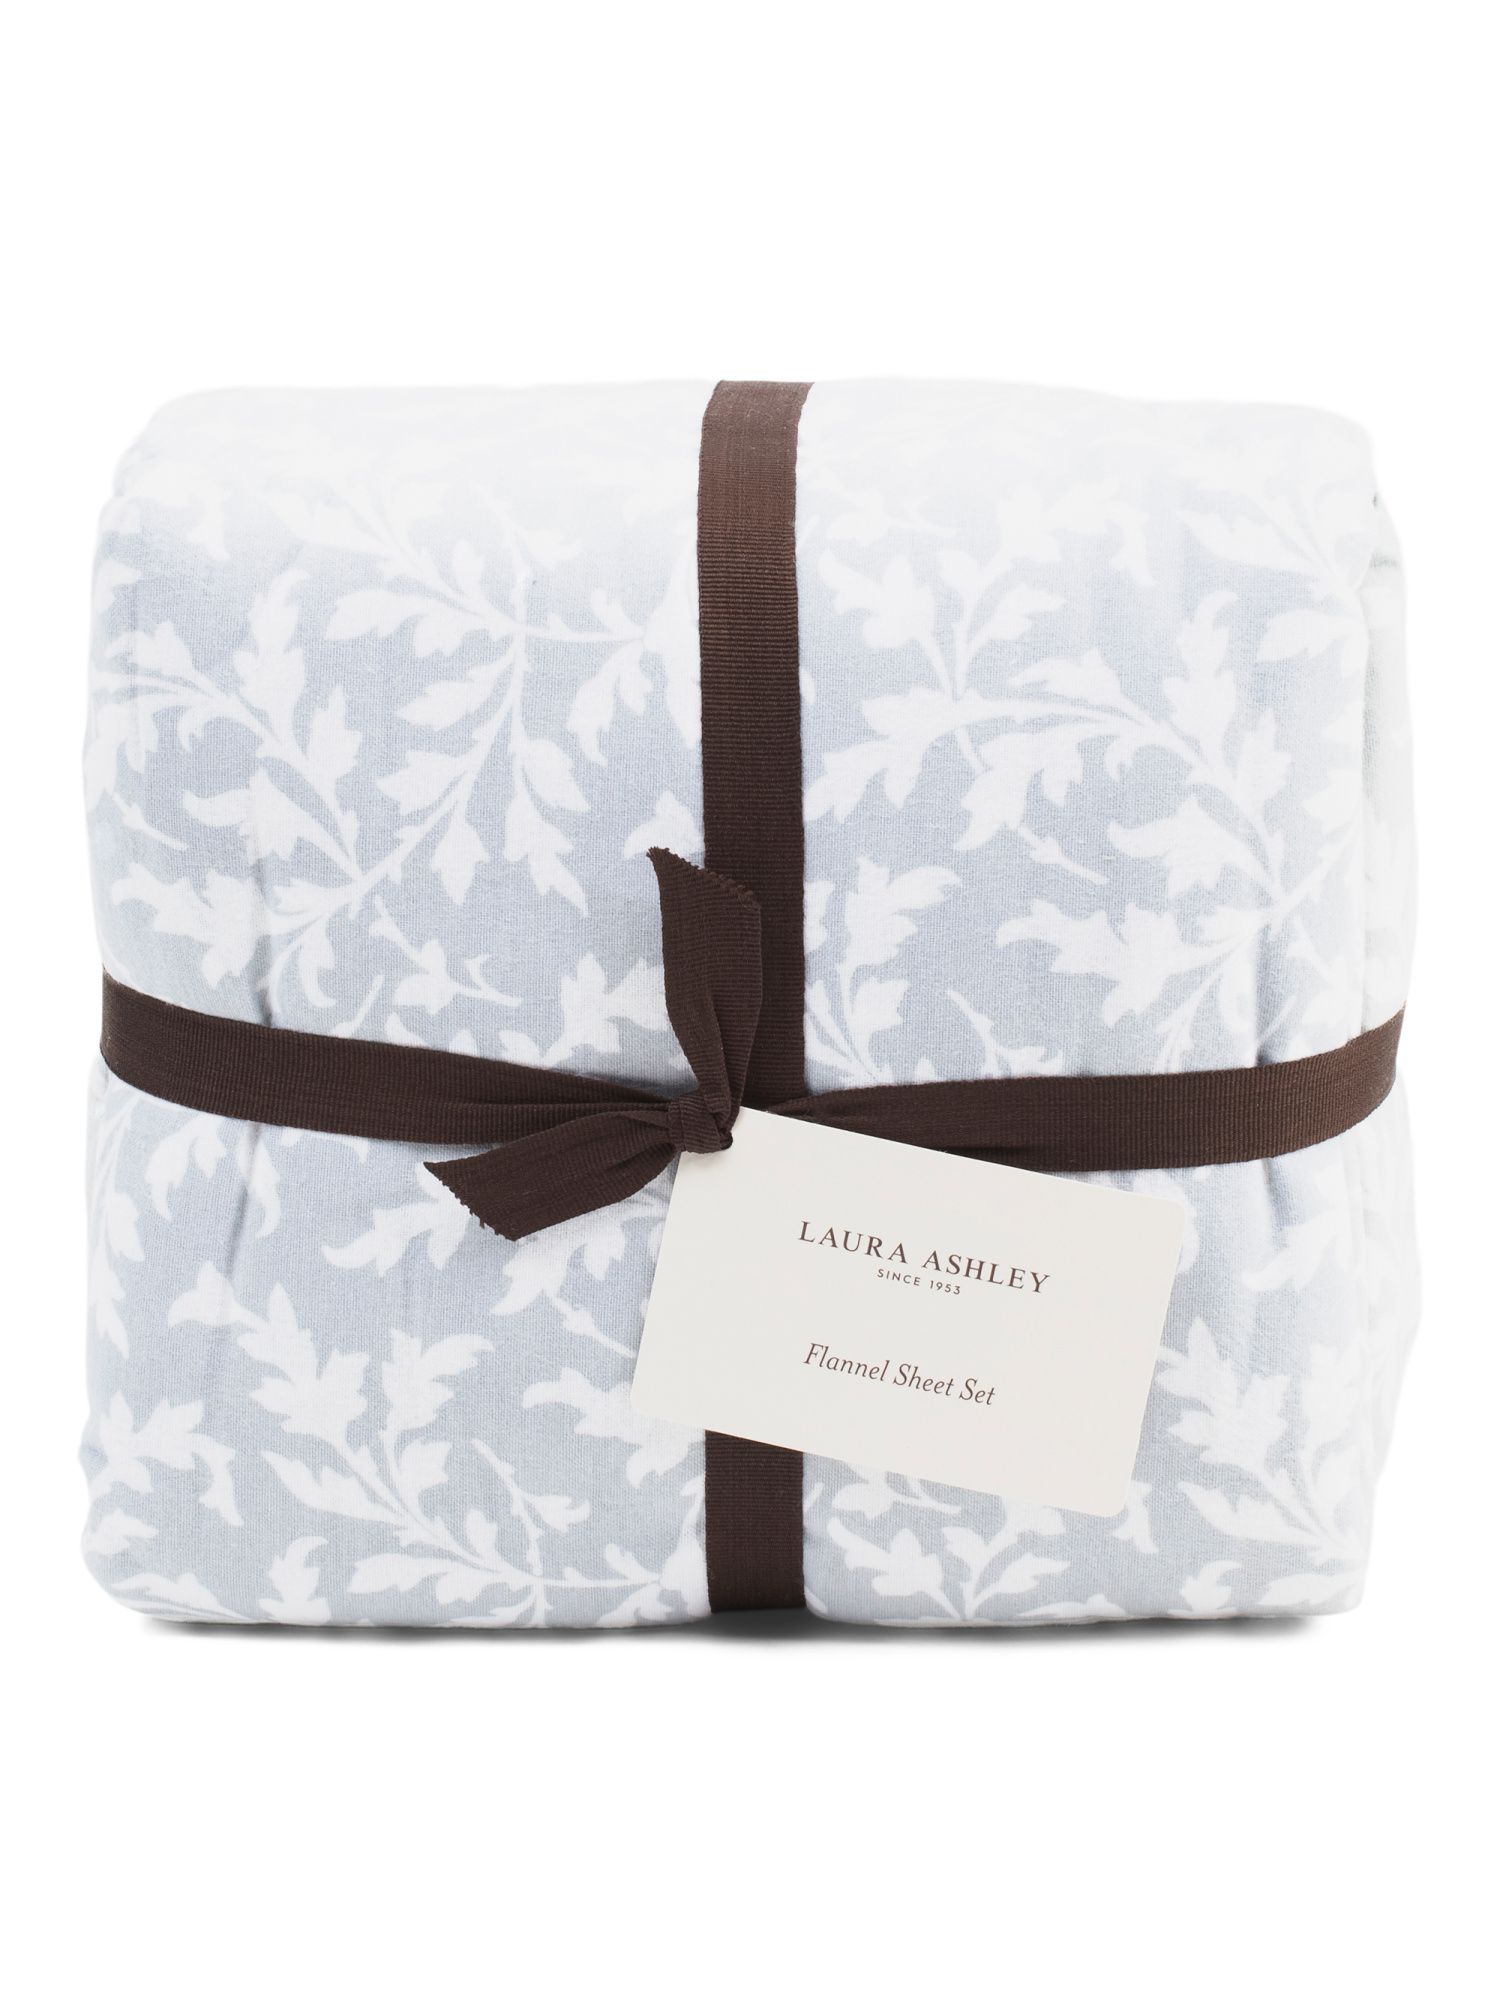 Floral Flannel Sheet Set | TJ Maxx